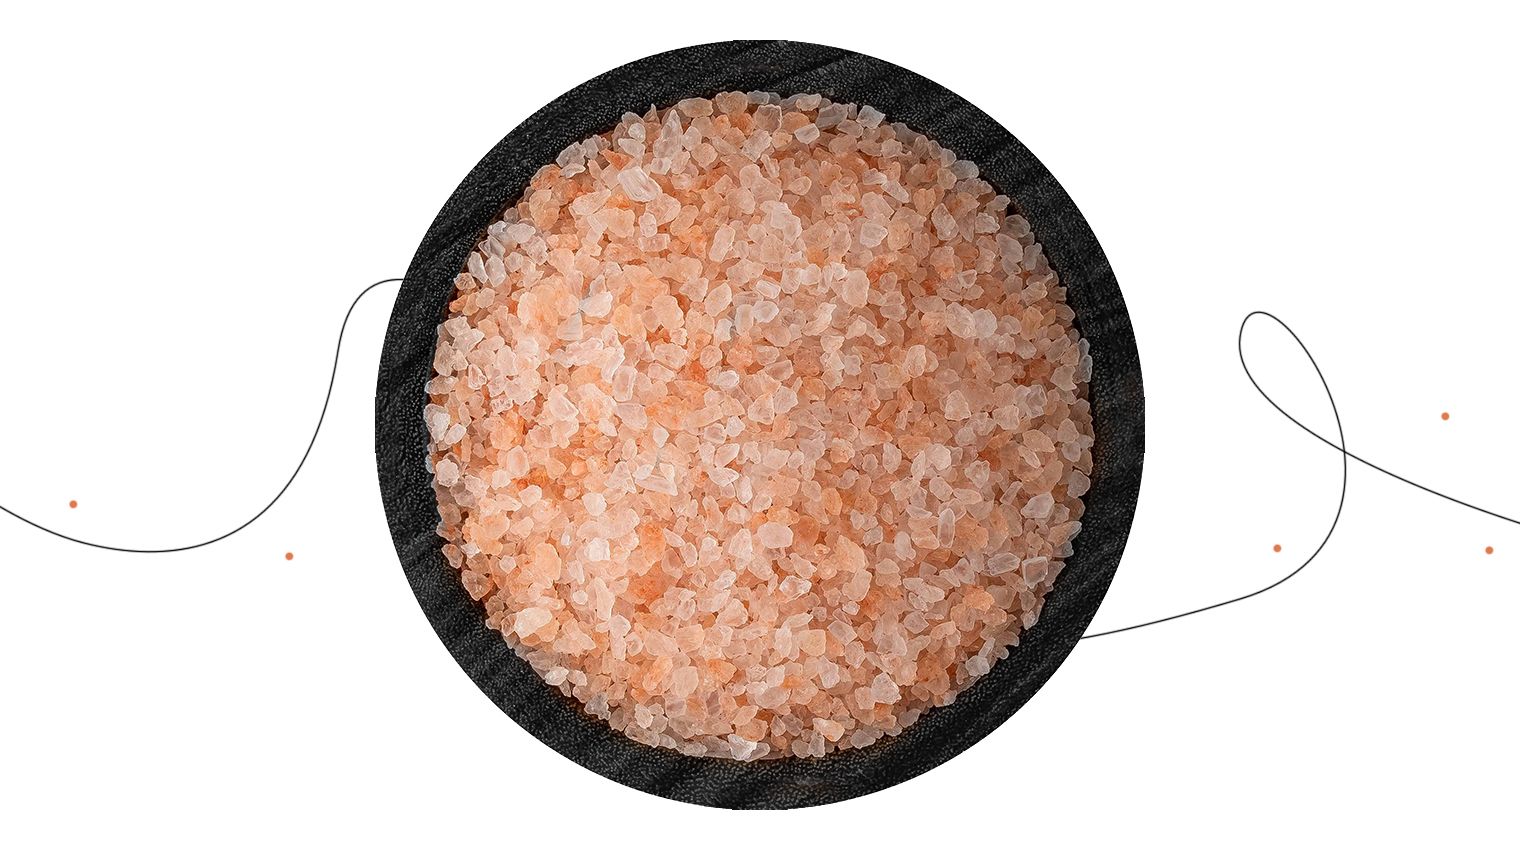 Untrending: Himalayan Salt Is Just Regular Salt That's Pink